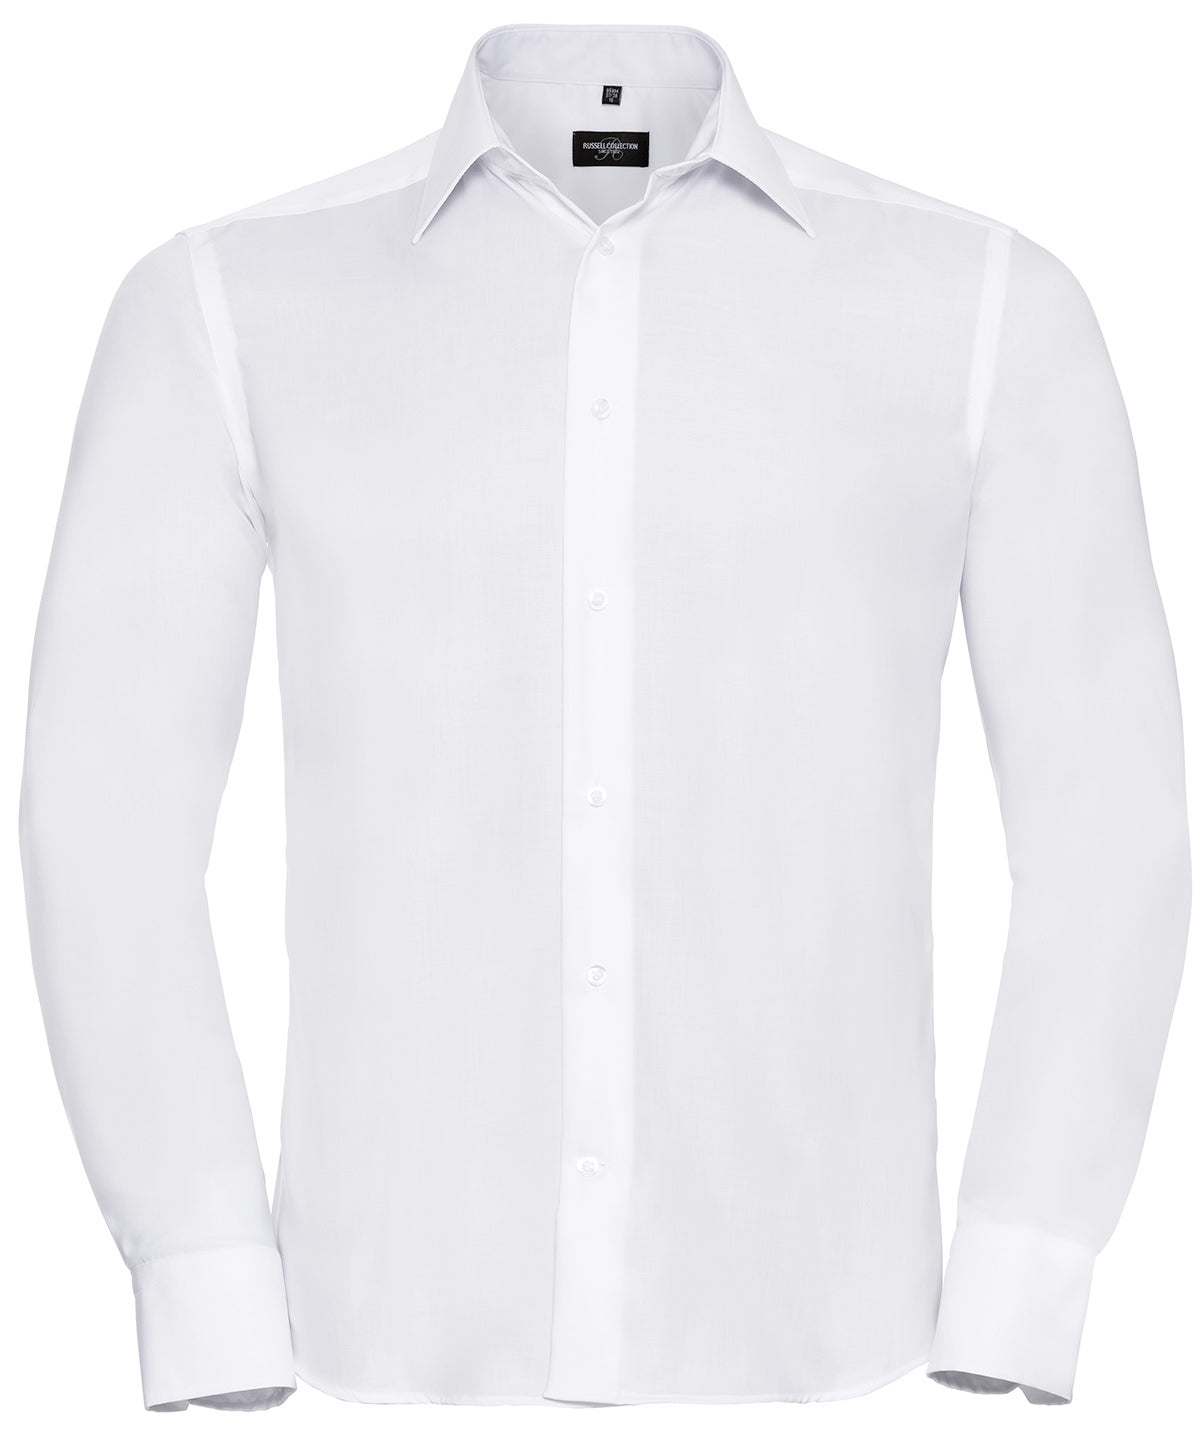 Bolir - Long Sleeve Tailored Ultimate Non-iron Shirt